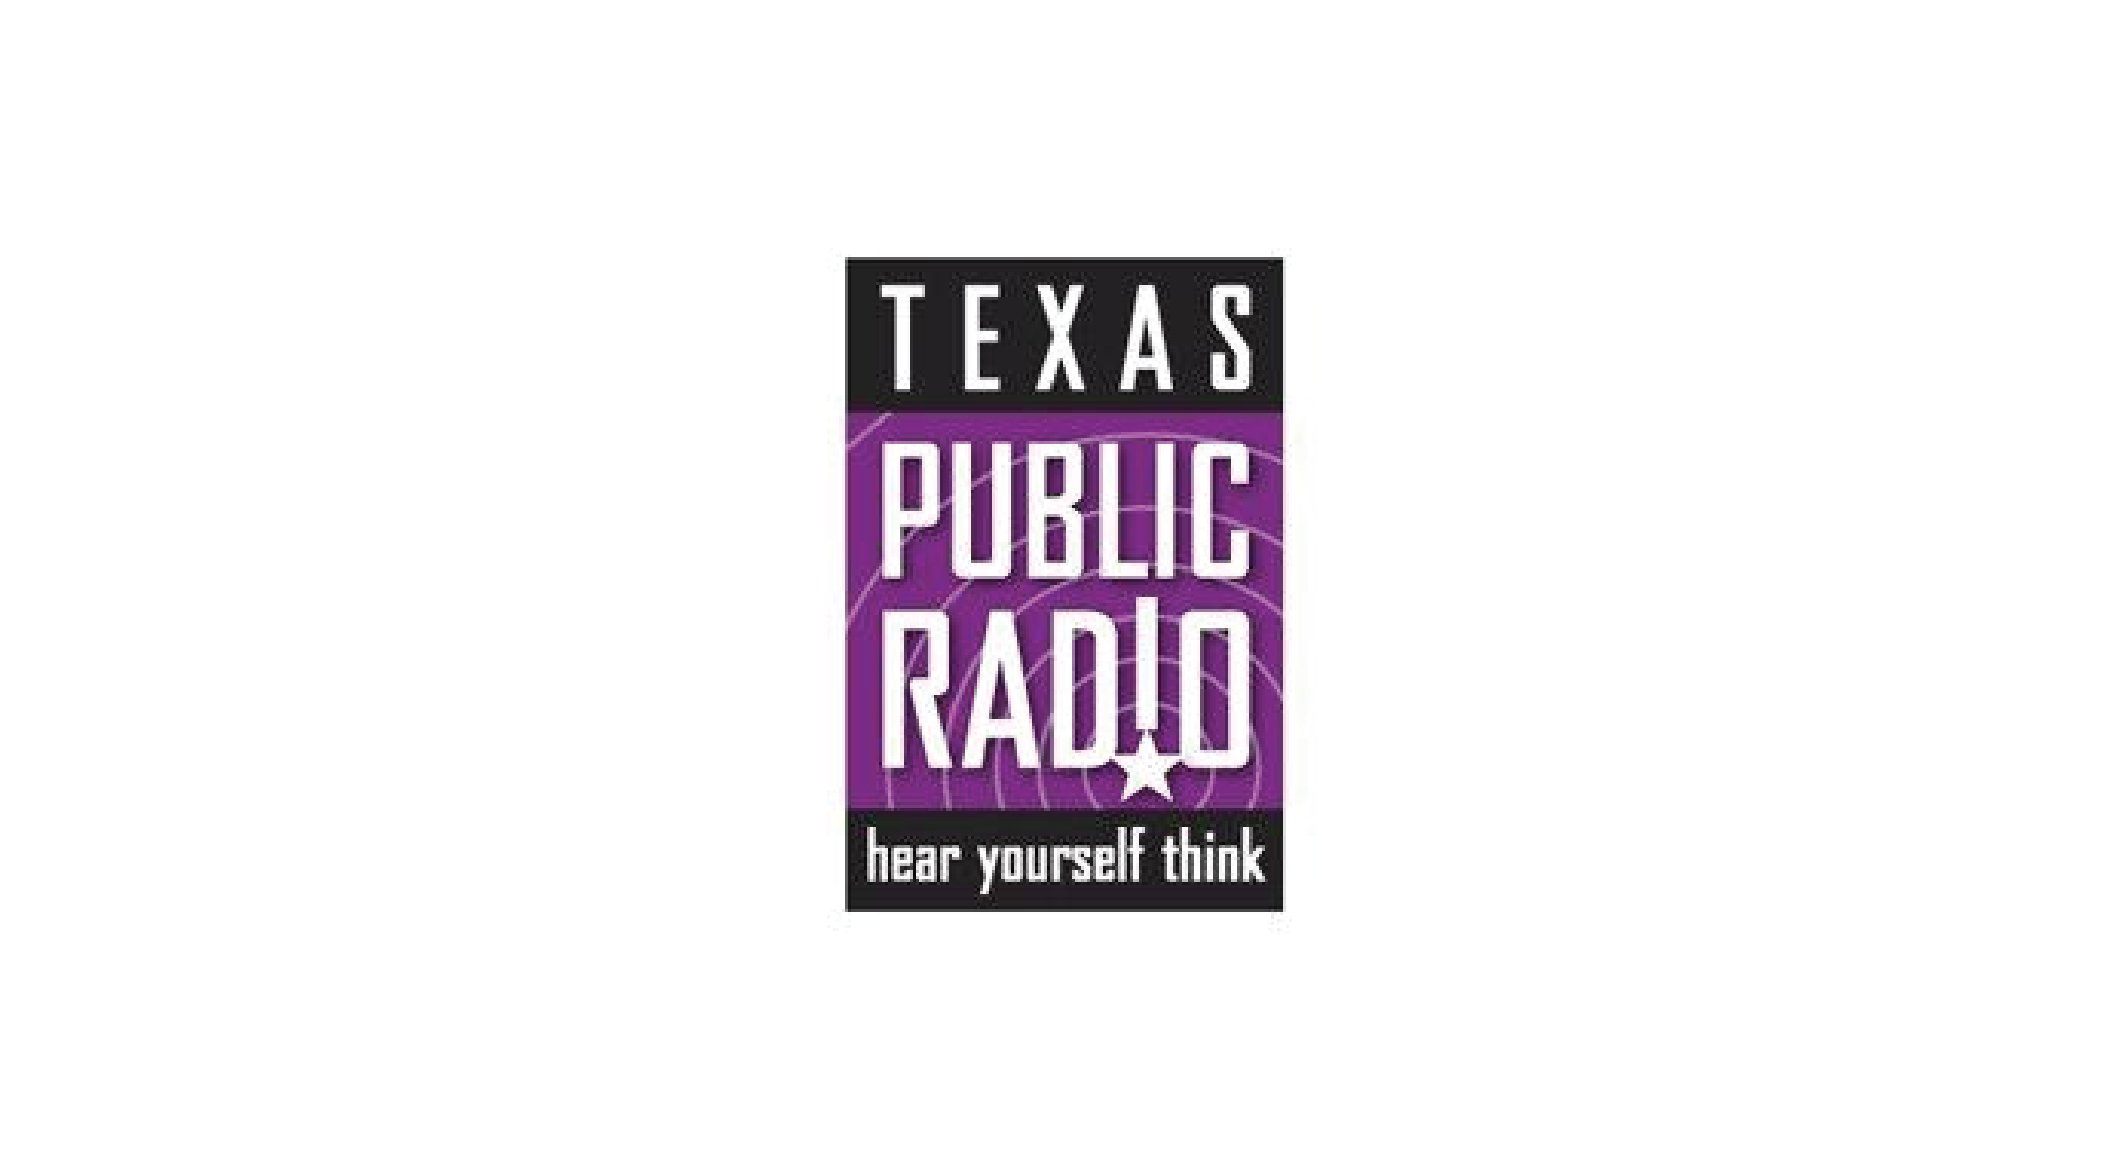 San Antonio’s 2014 MLK Interfaith Service / Texas Public Radio